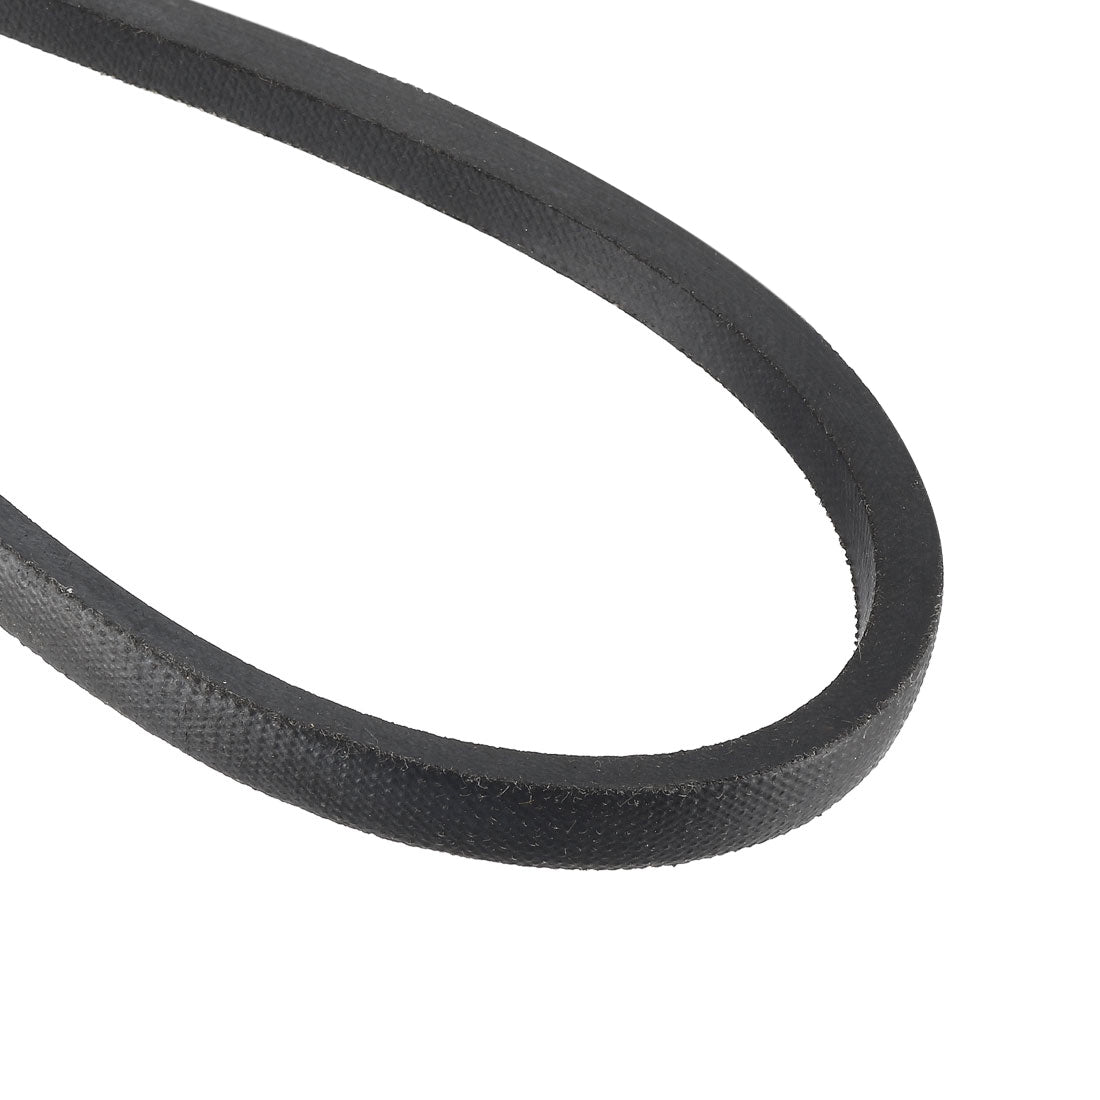 uxcell Uxcell A30 V-Belts 30" Pitch Length, A-Section Rubber Drive Belt 2pcs